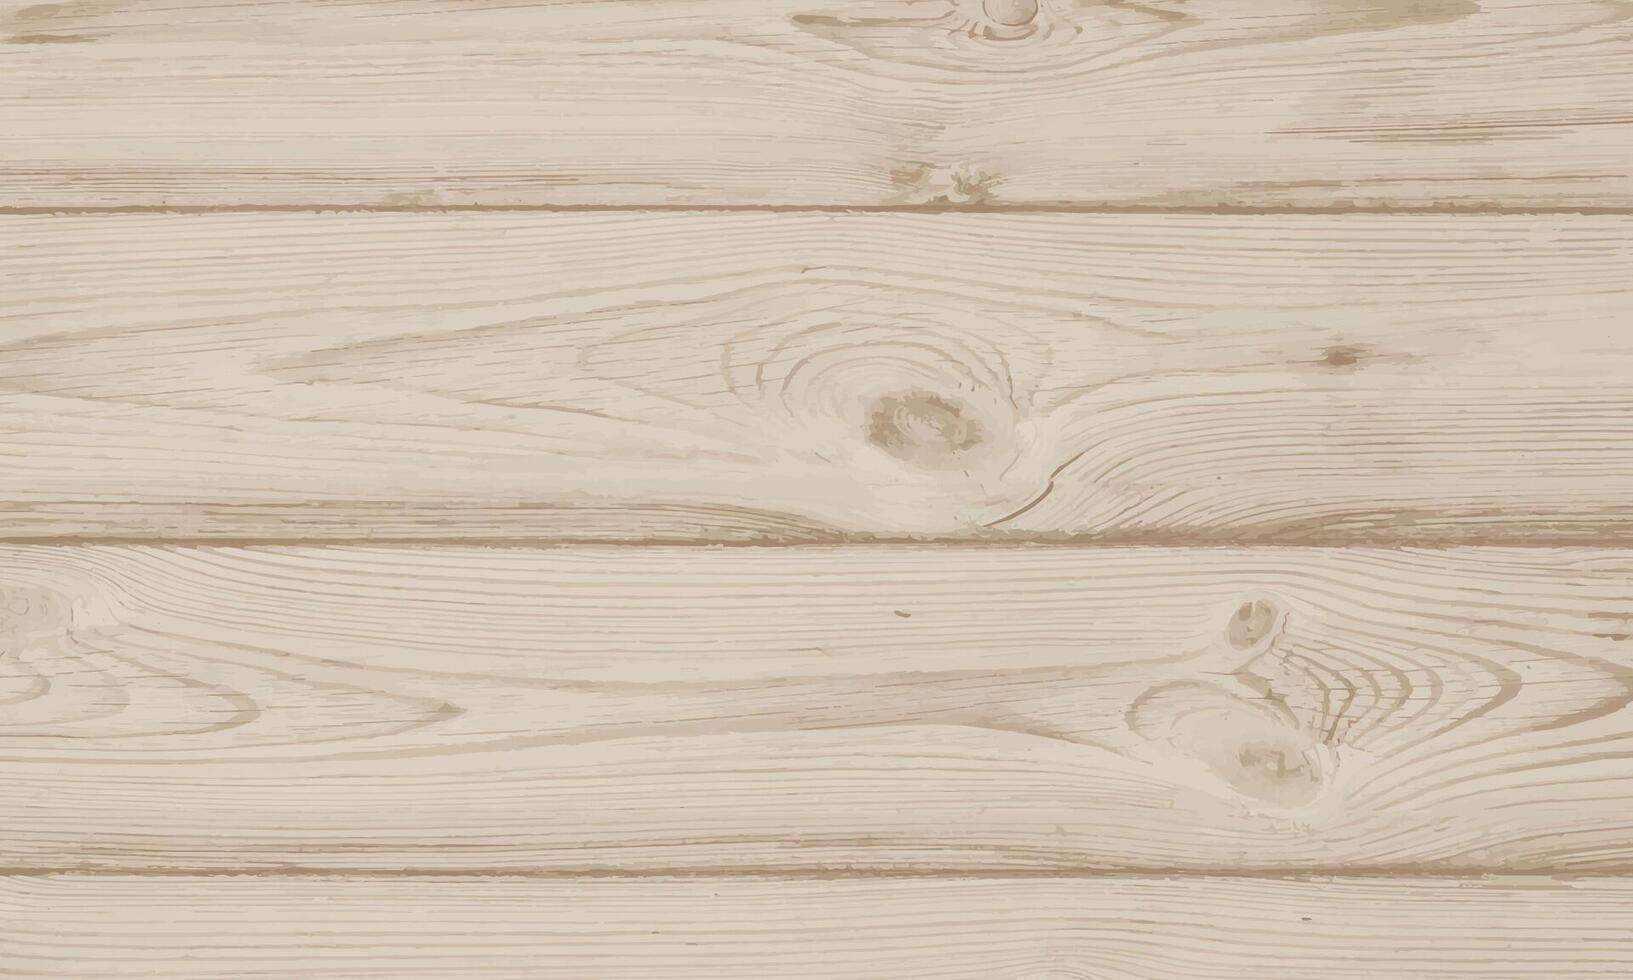 Natural wooden texture background design vector